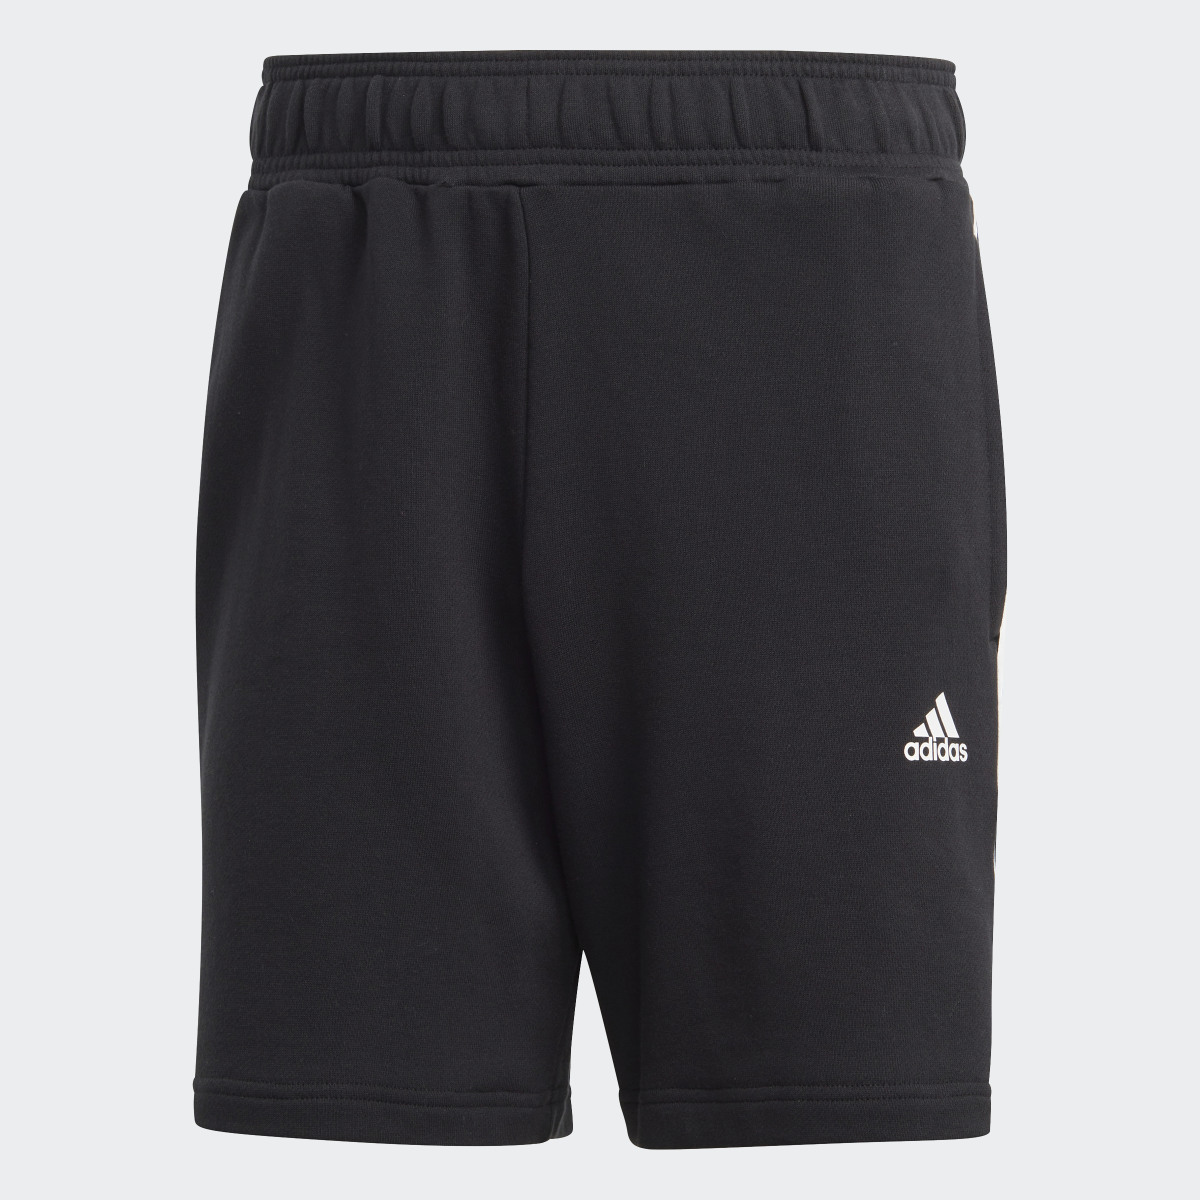 Adidas Brandlove Shorts. 4